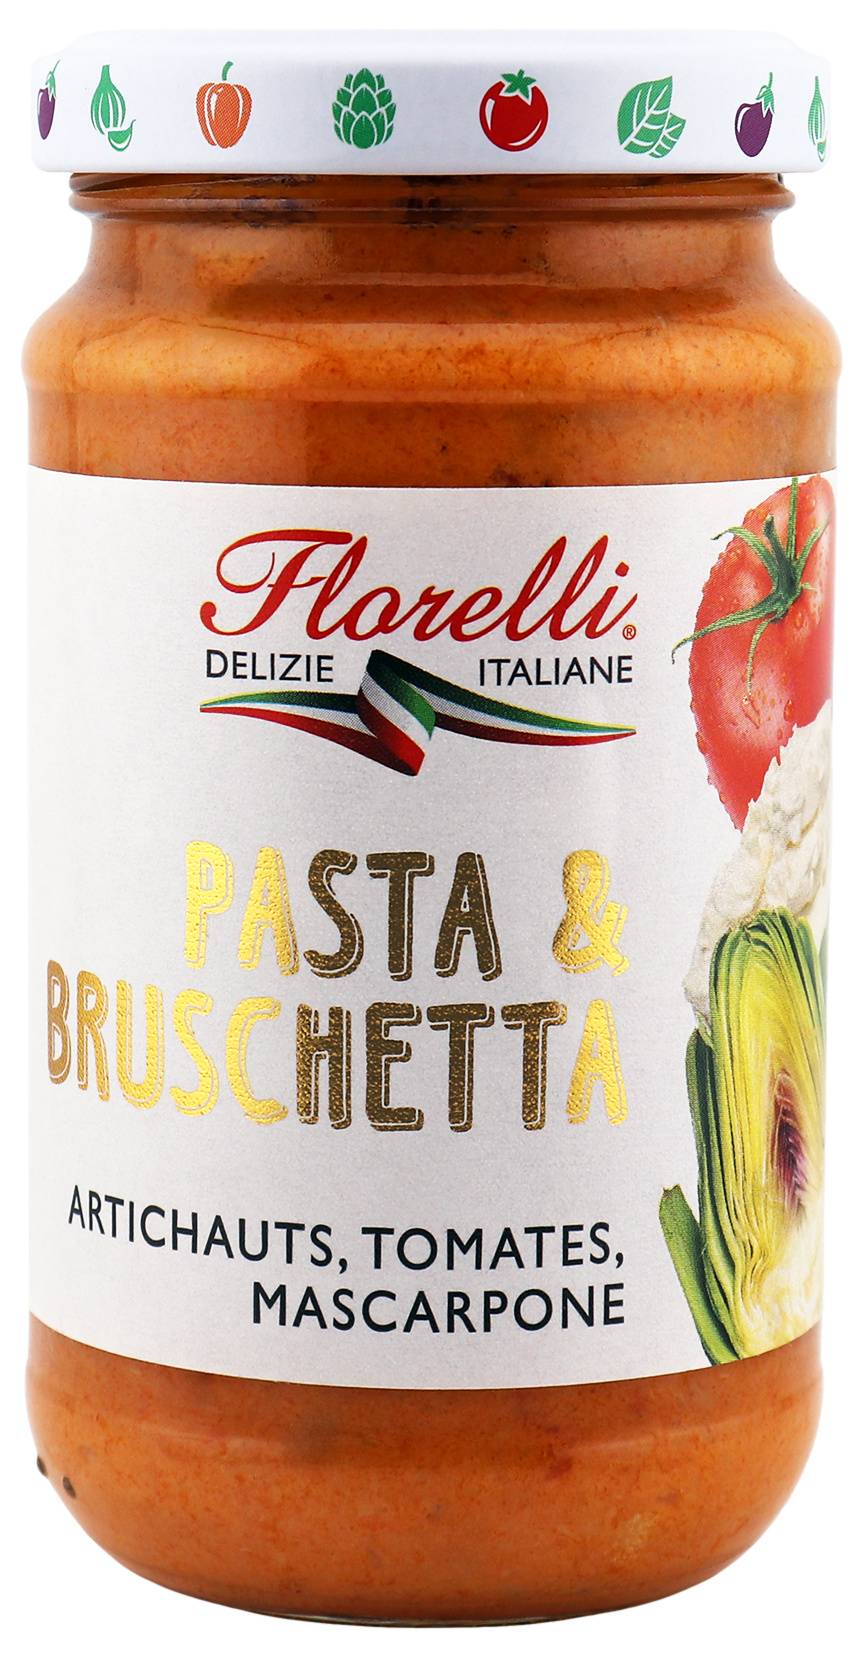 Florelli - Pasta and bruschetta artichauts, tomates et mascarpone